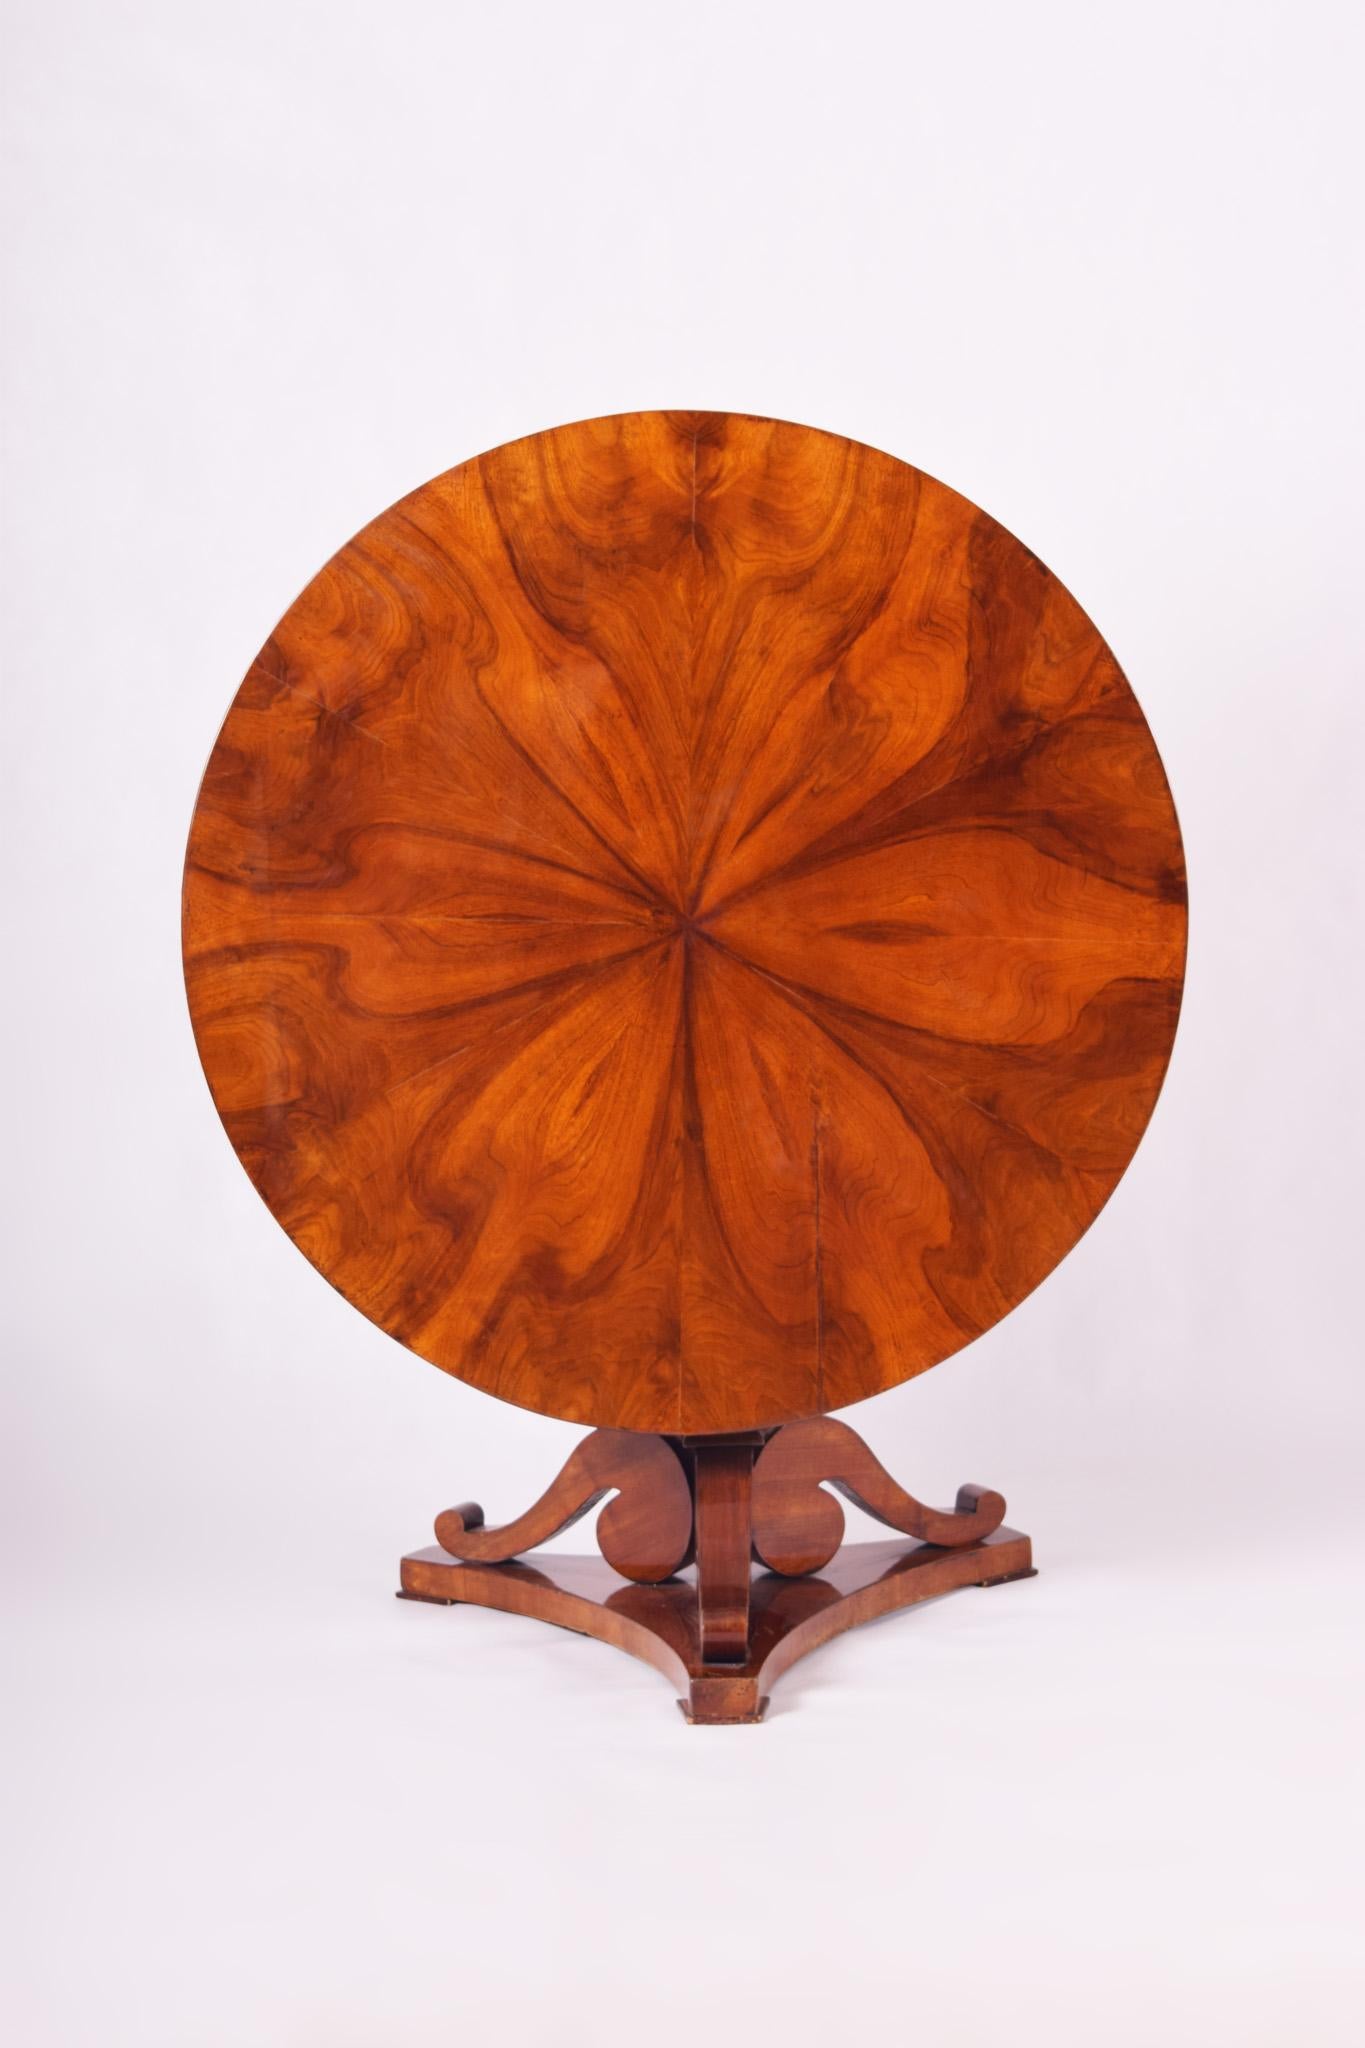 Biedermeier round table (folding).
Shellac polish, Walnut veneer.
Completely restored.
Source: Austria
Period: 1830-1839.